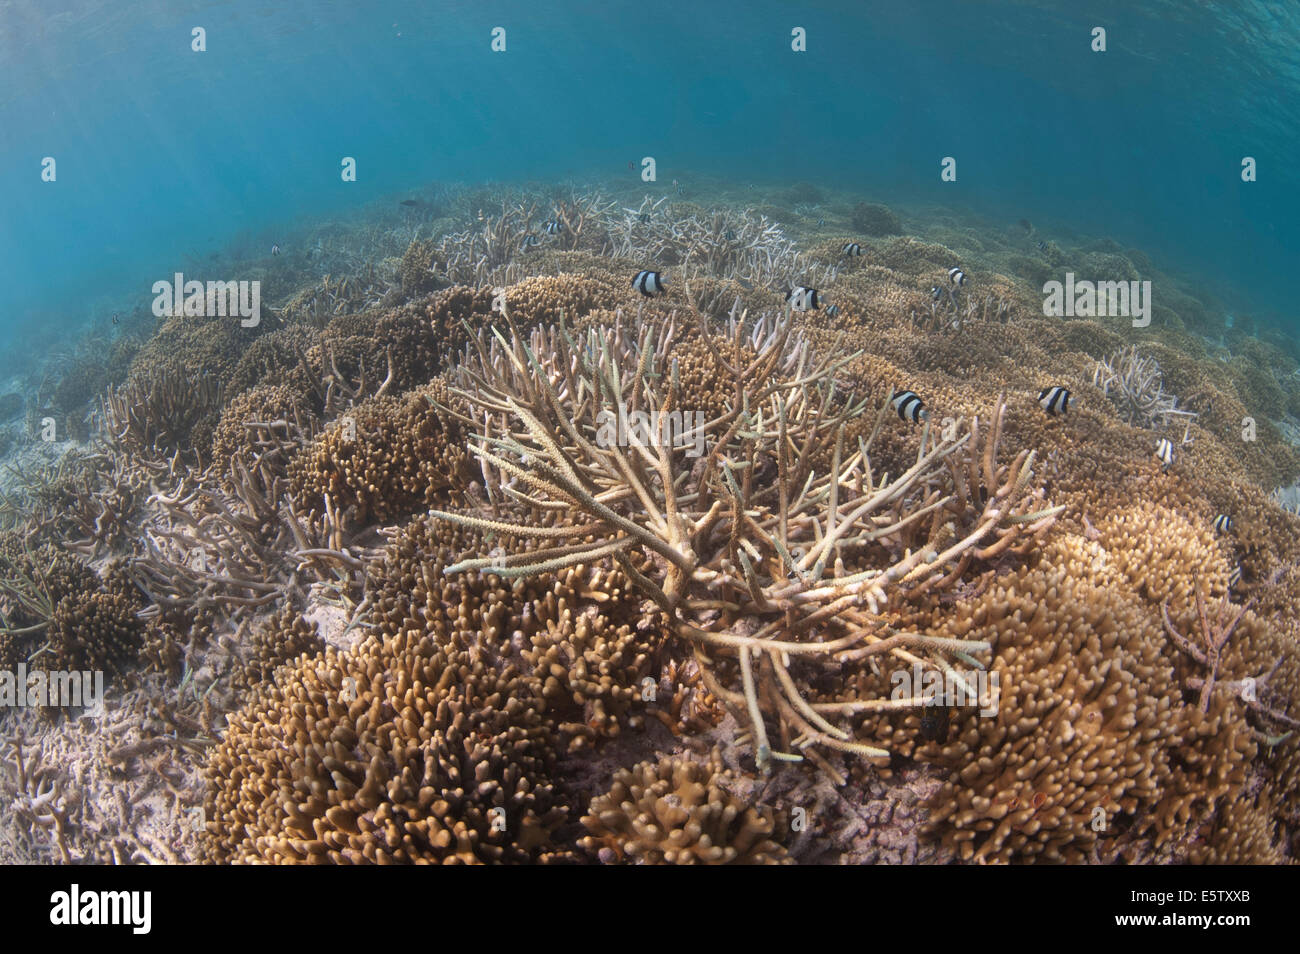 Humbug Dascyllus in a shallow coral garden in Maldives Stock Photo